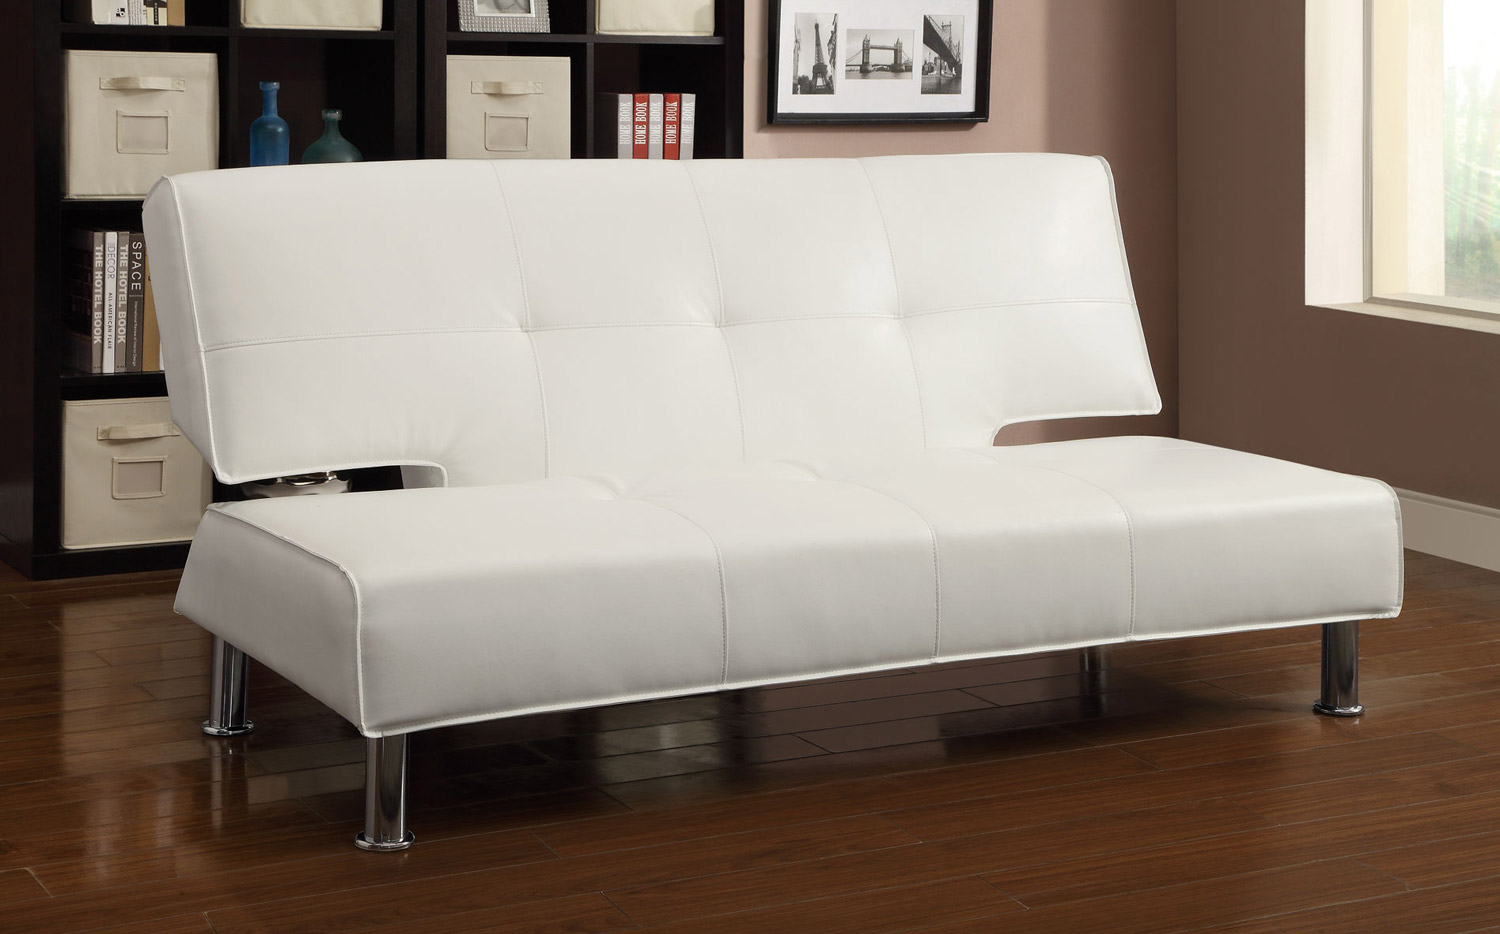 Coaster 300296 Sofa Bed - White